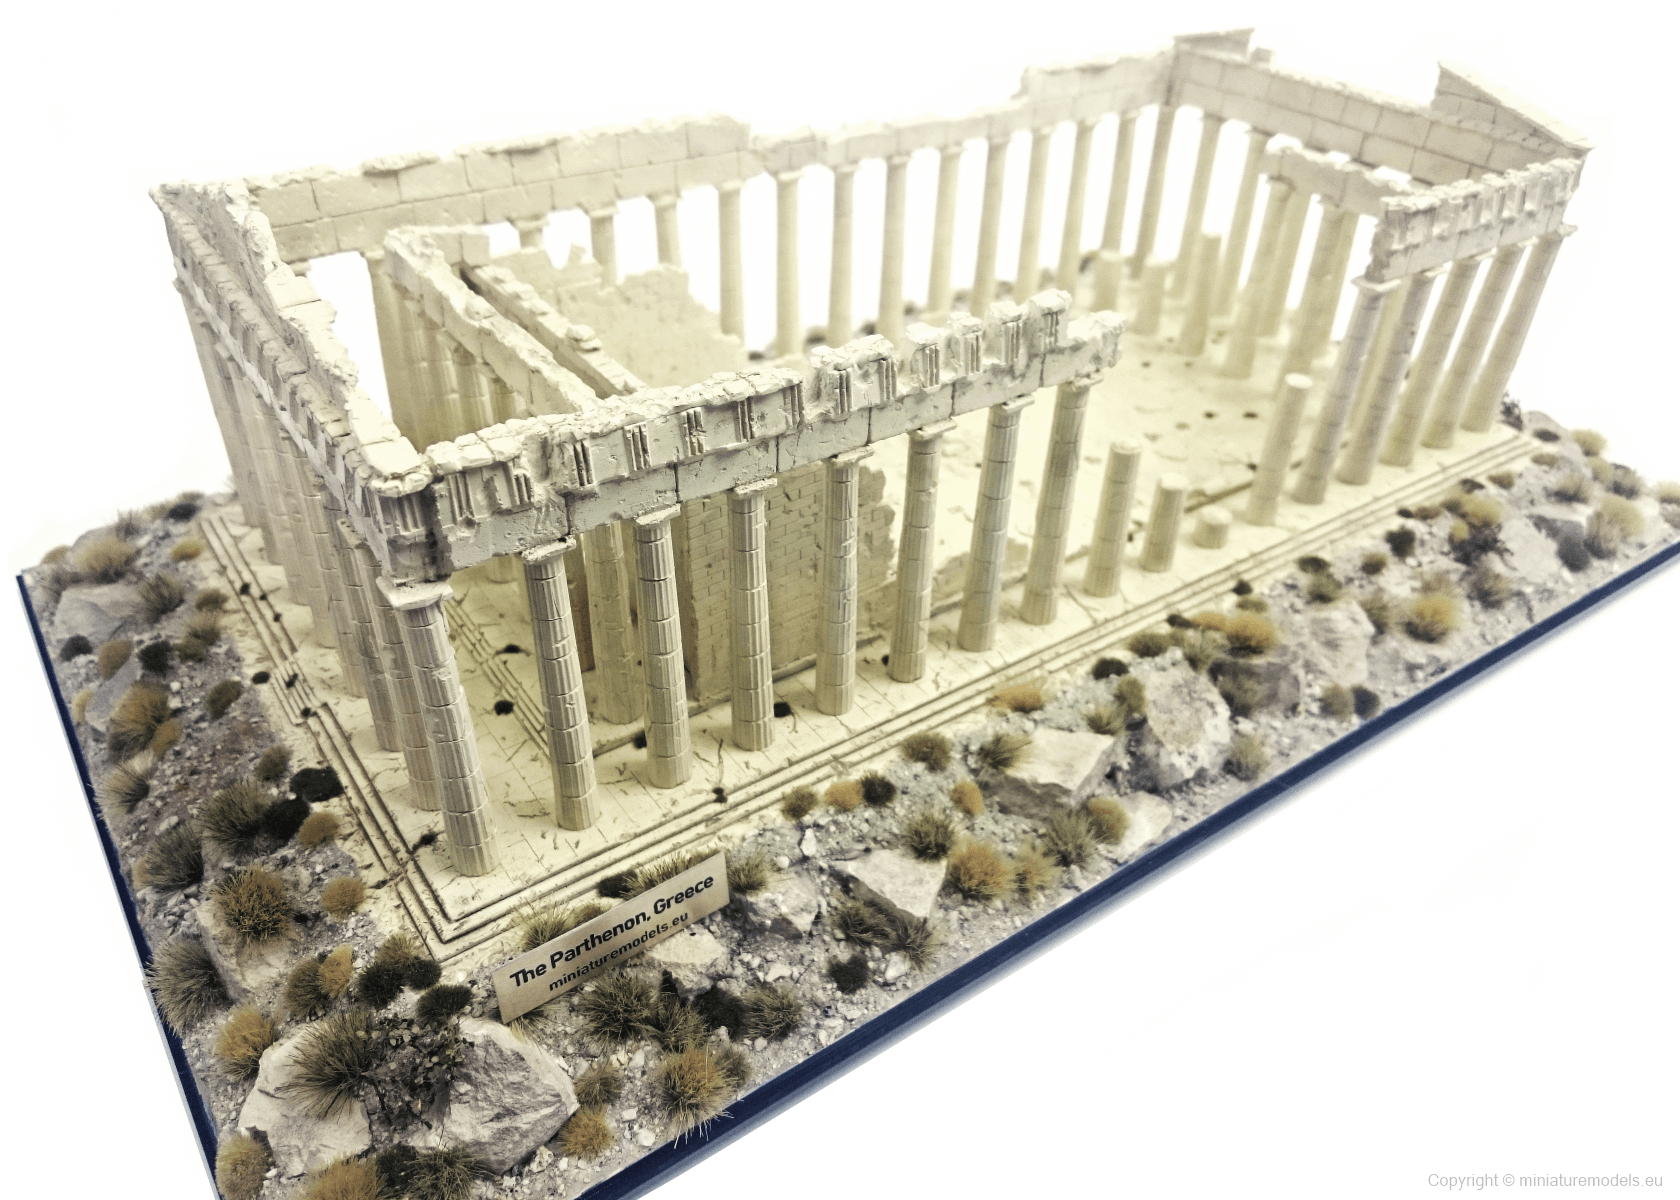 Miniature diorama of the Parthenon temple